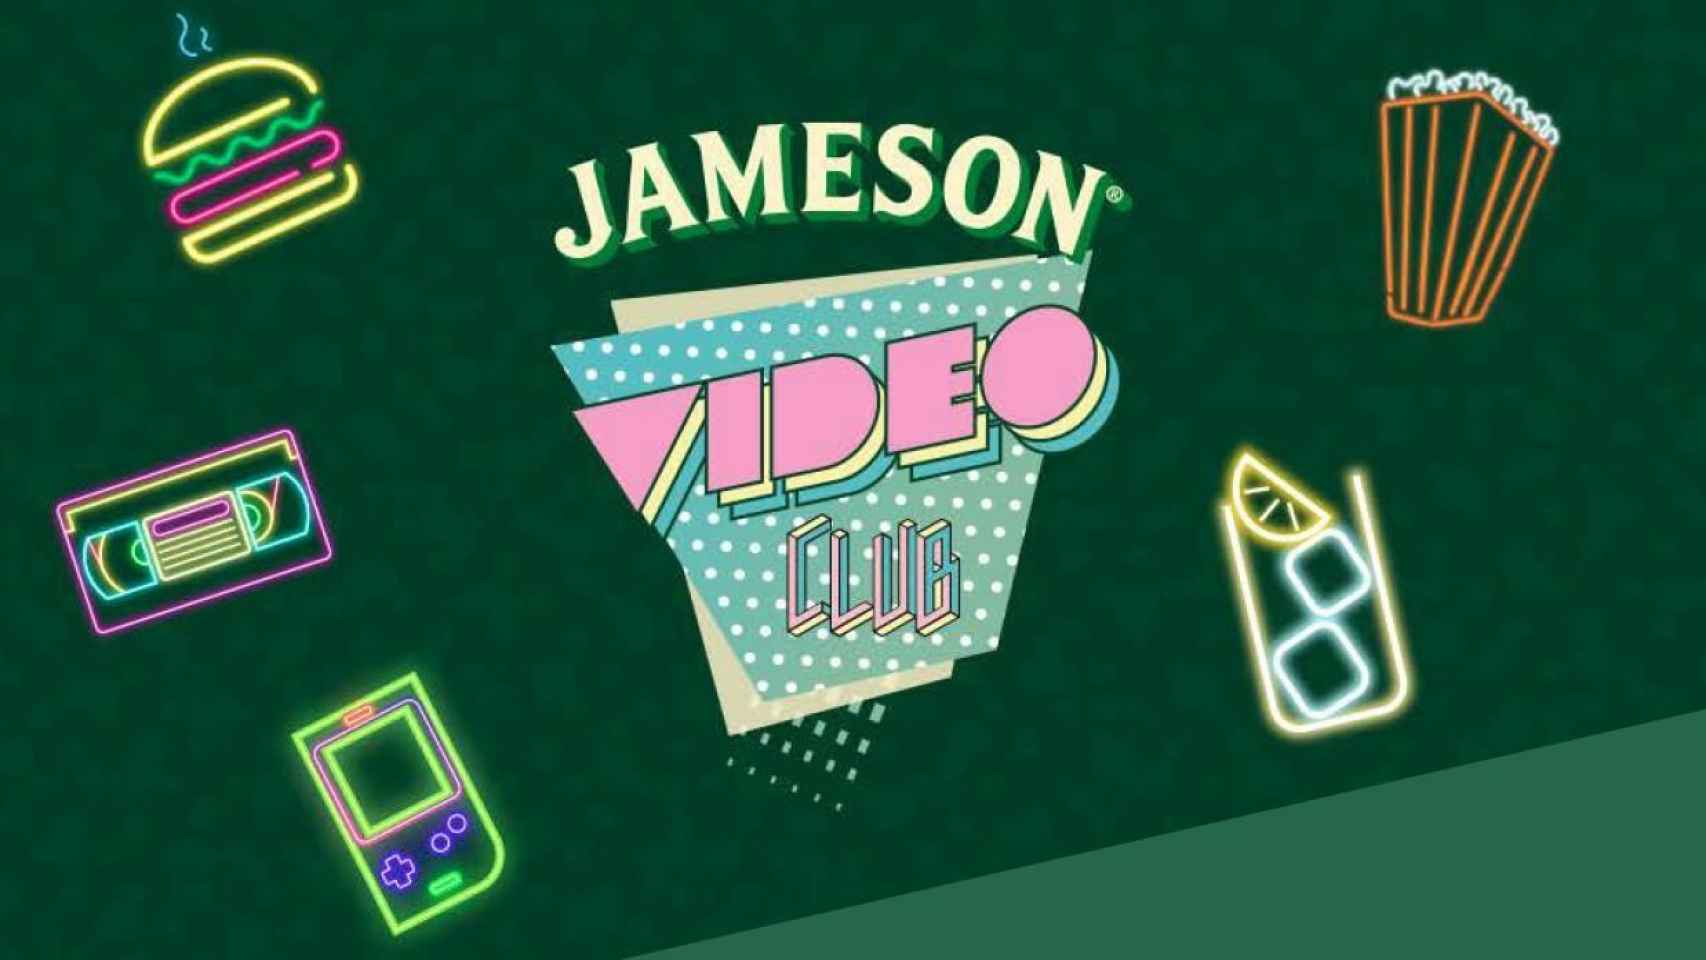 Jameson video club